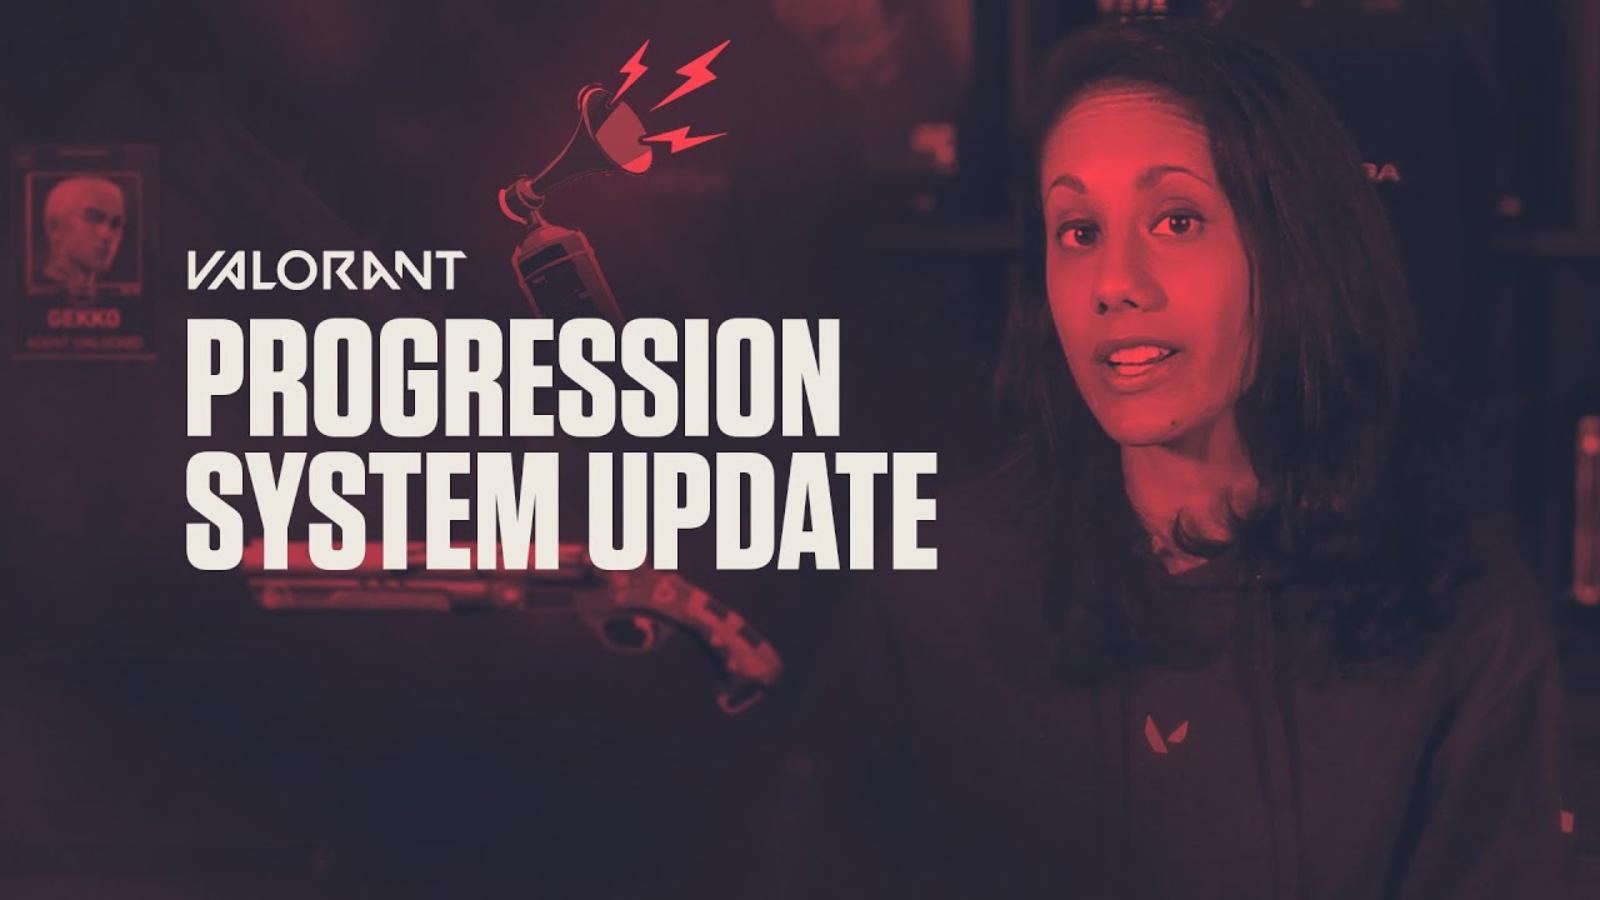 Valorant's new Progression System update